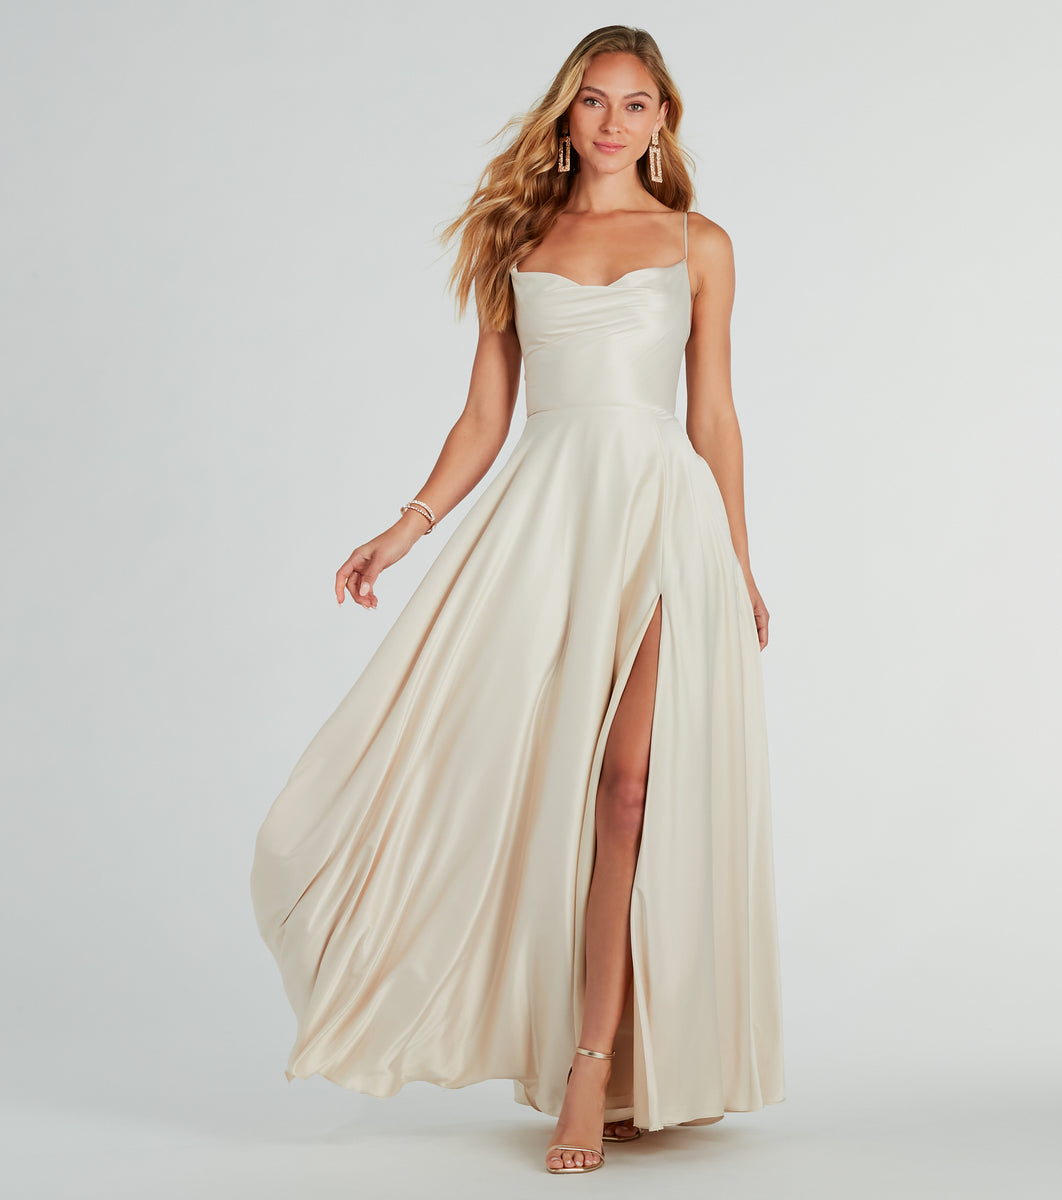 Winslow Formal Satin Lace-Up Dress